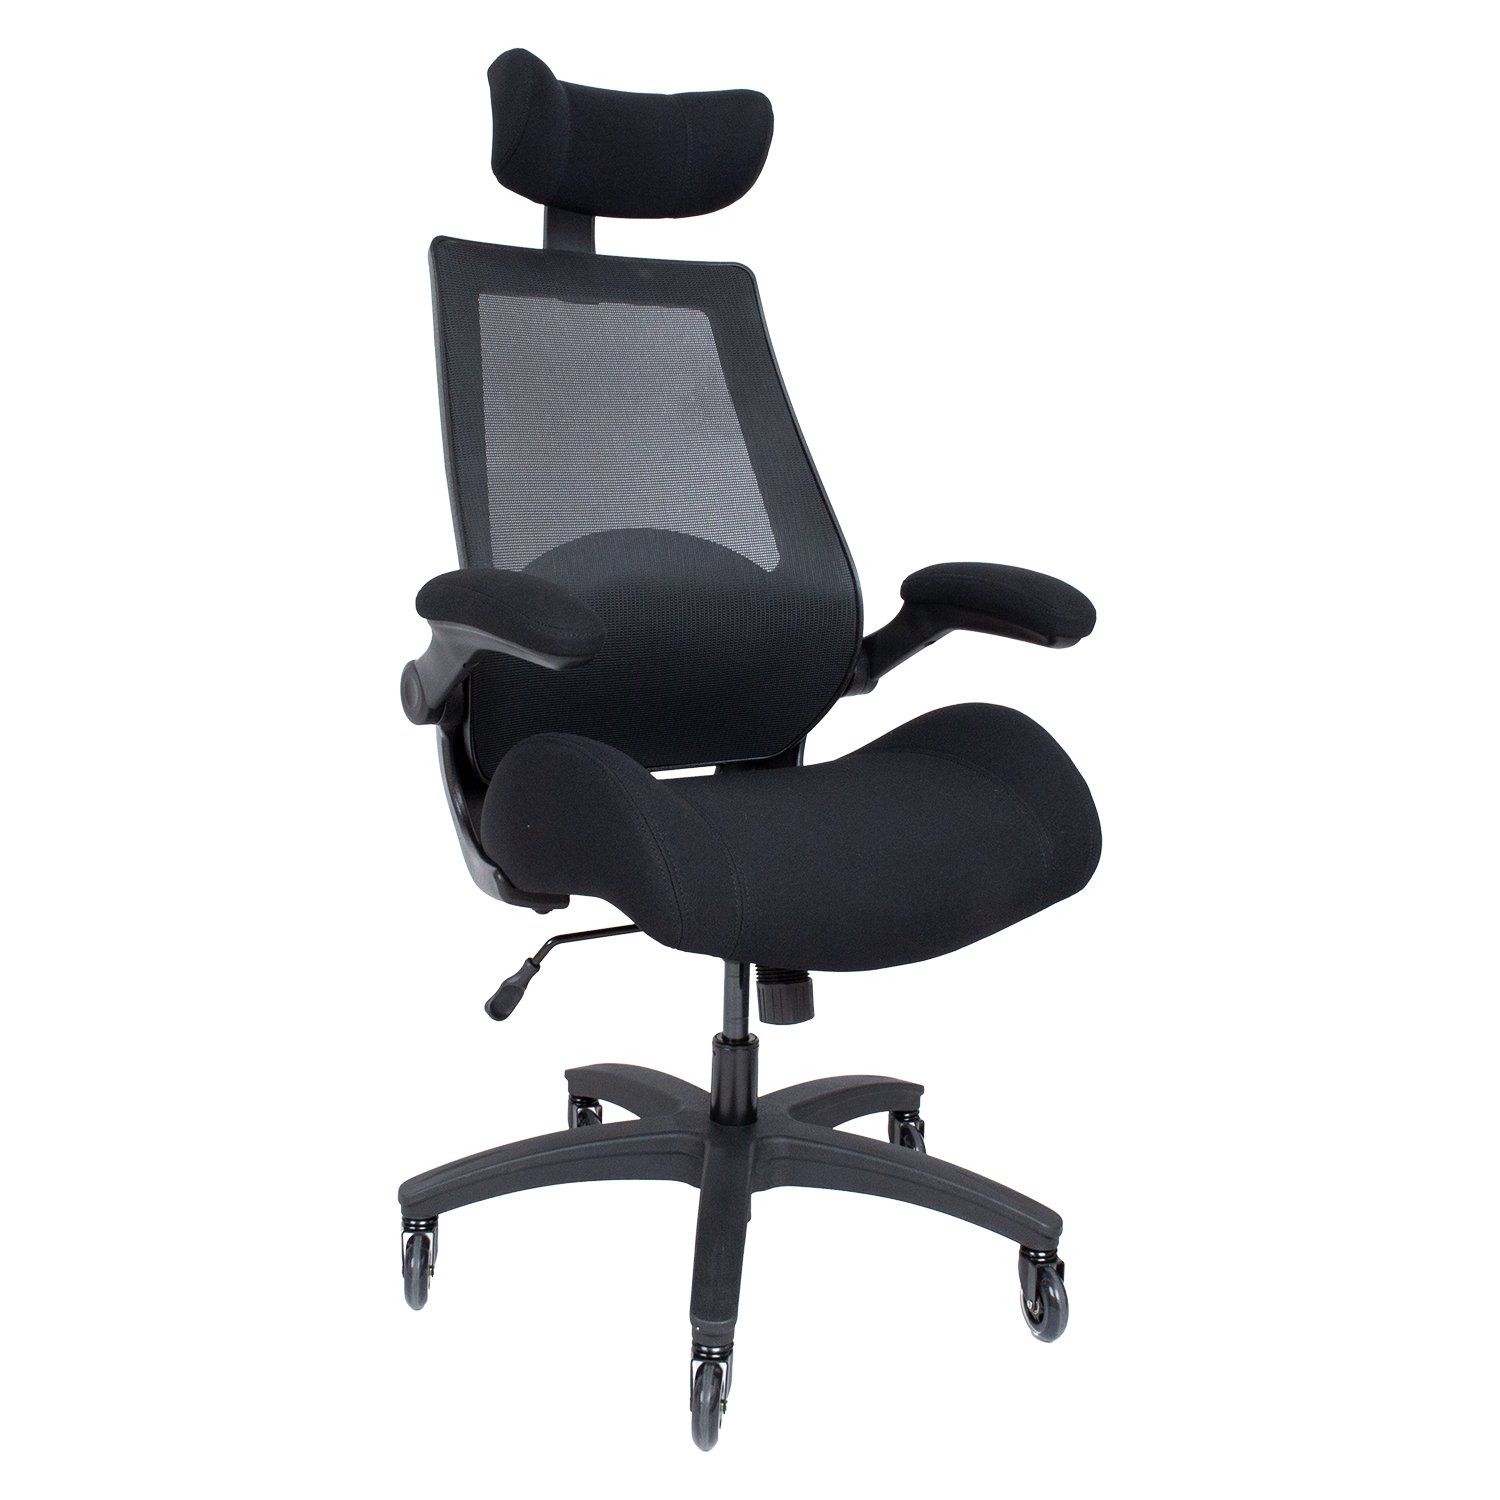 Biuro kėdė MILLER, 70x71x121-131 cm, juoda